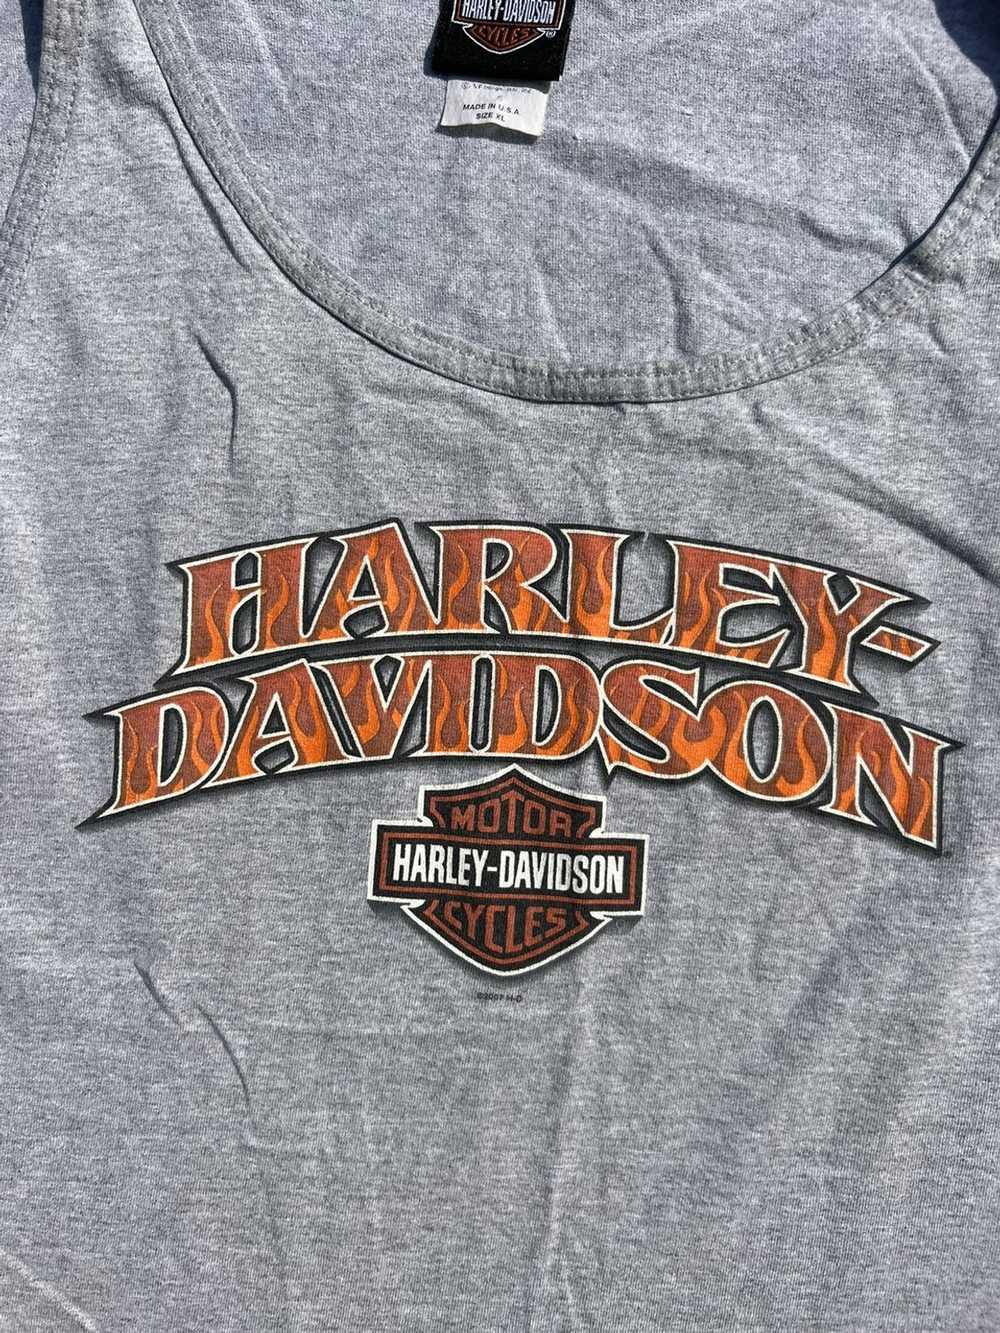 Harley Davidson Harley Davidson Tank Top - image 3